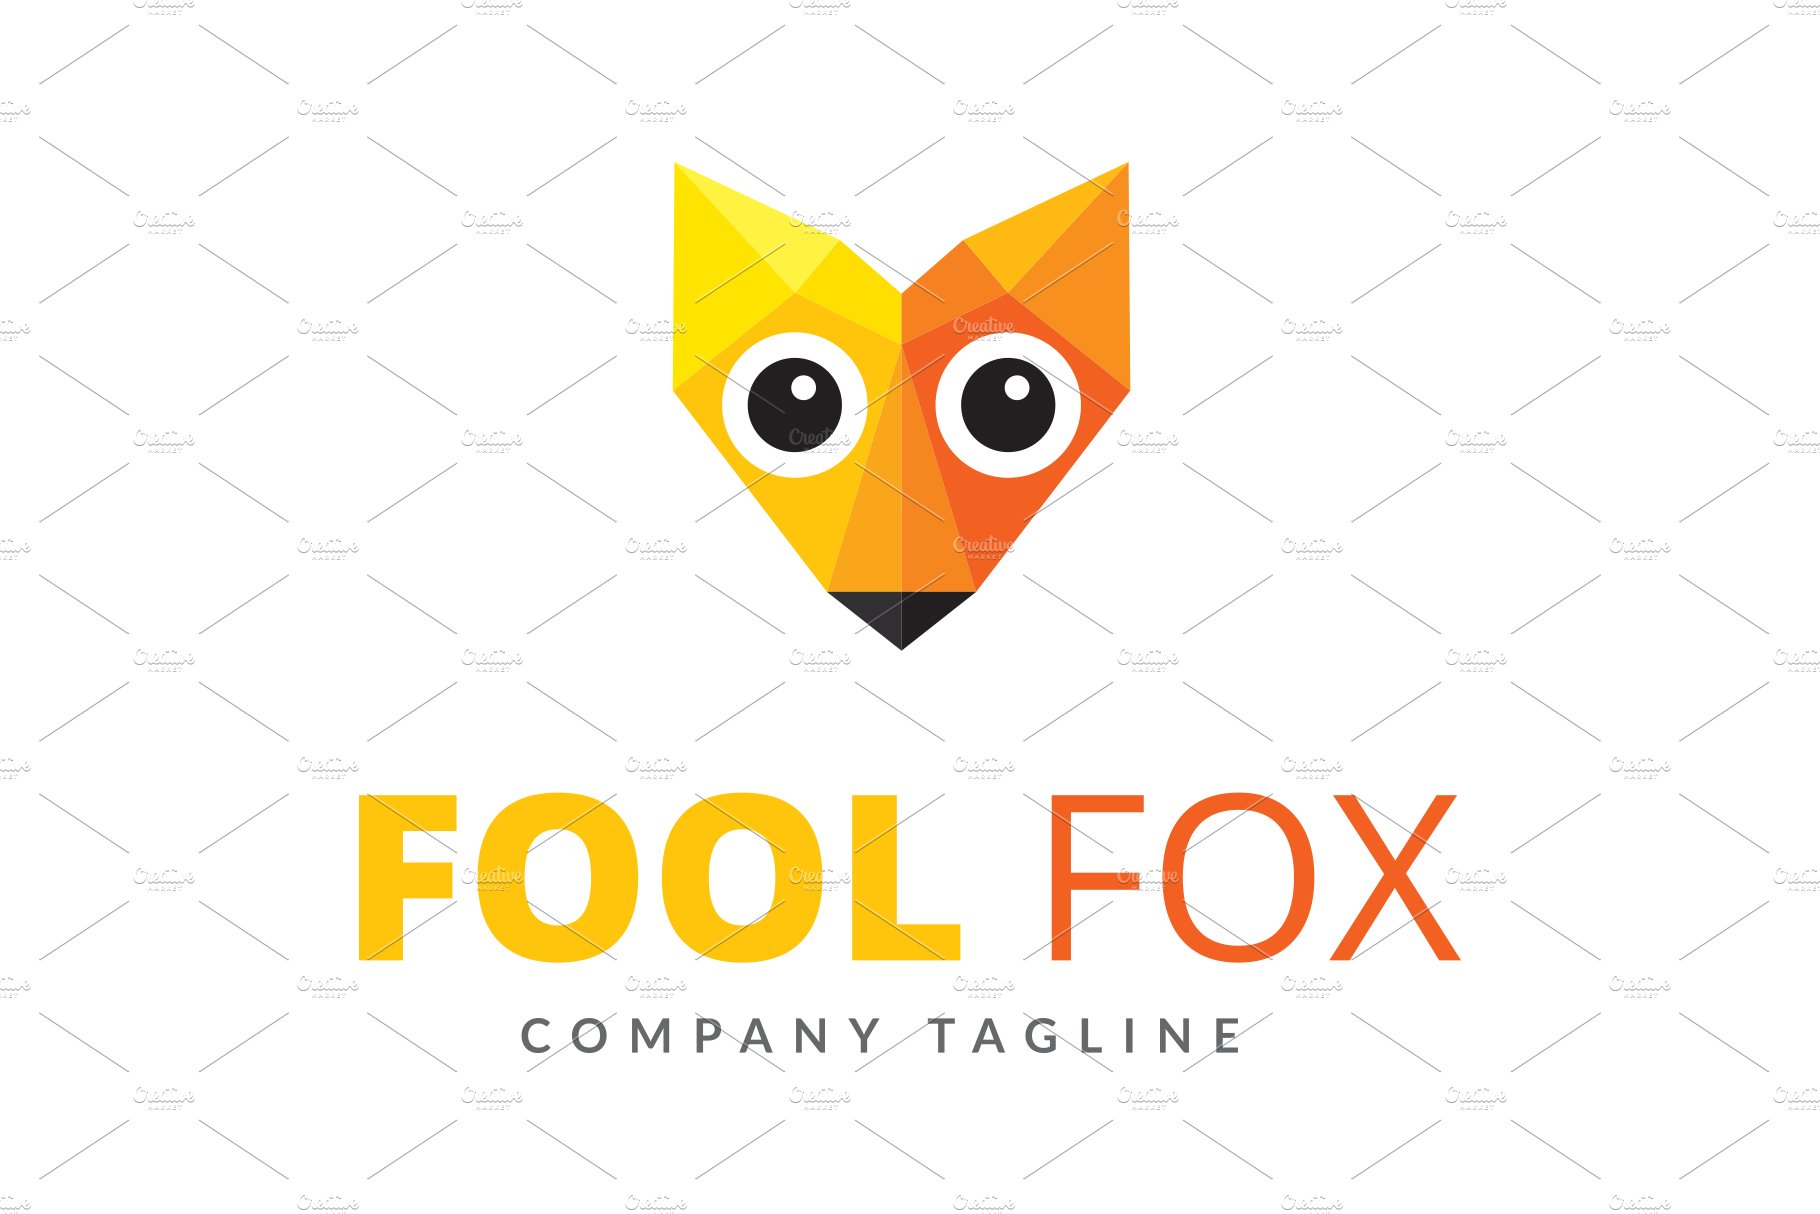 Fool Fox Logo Design cover image.